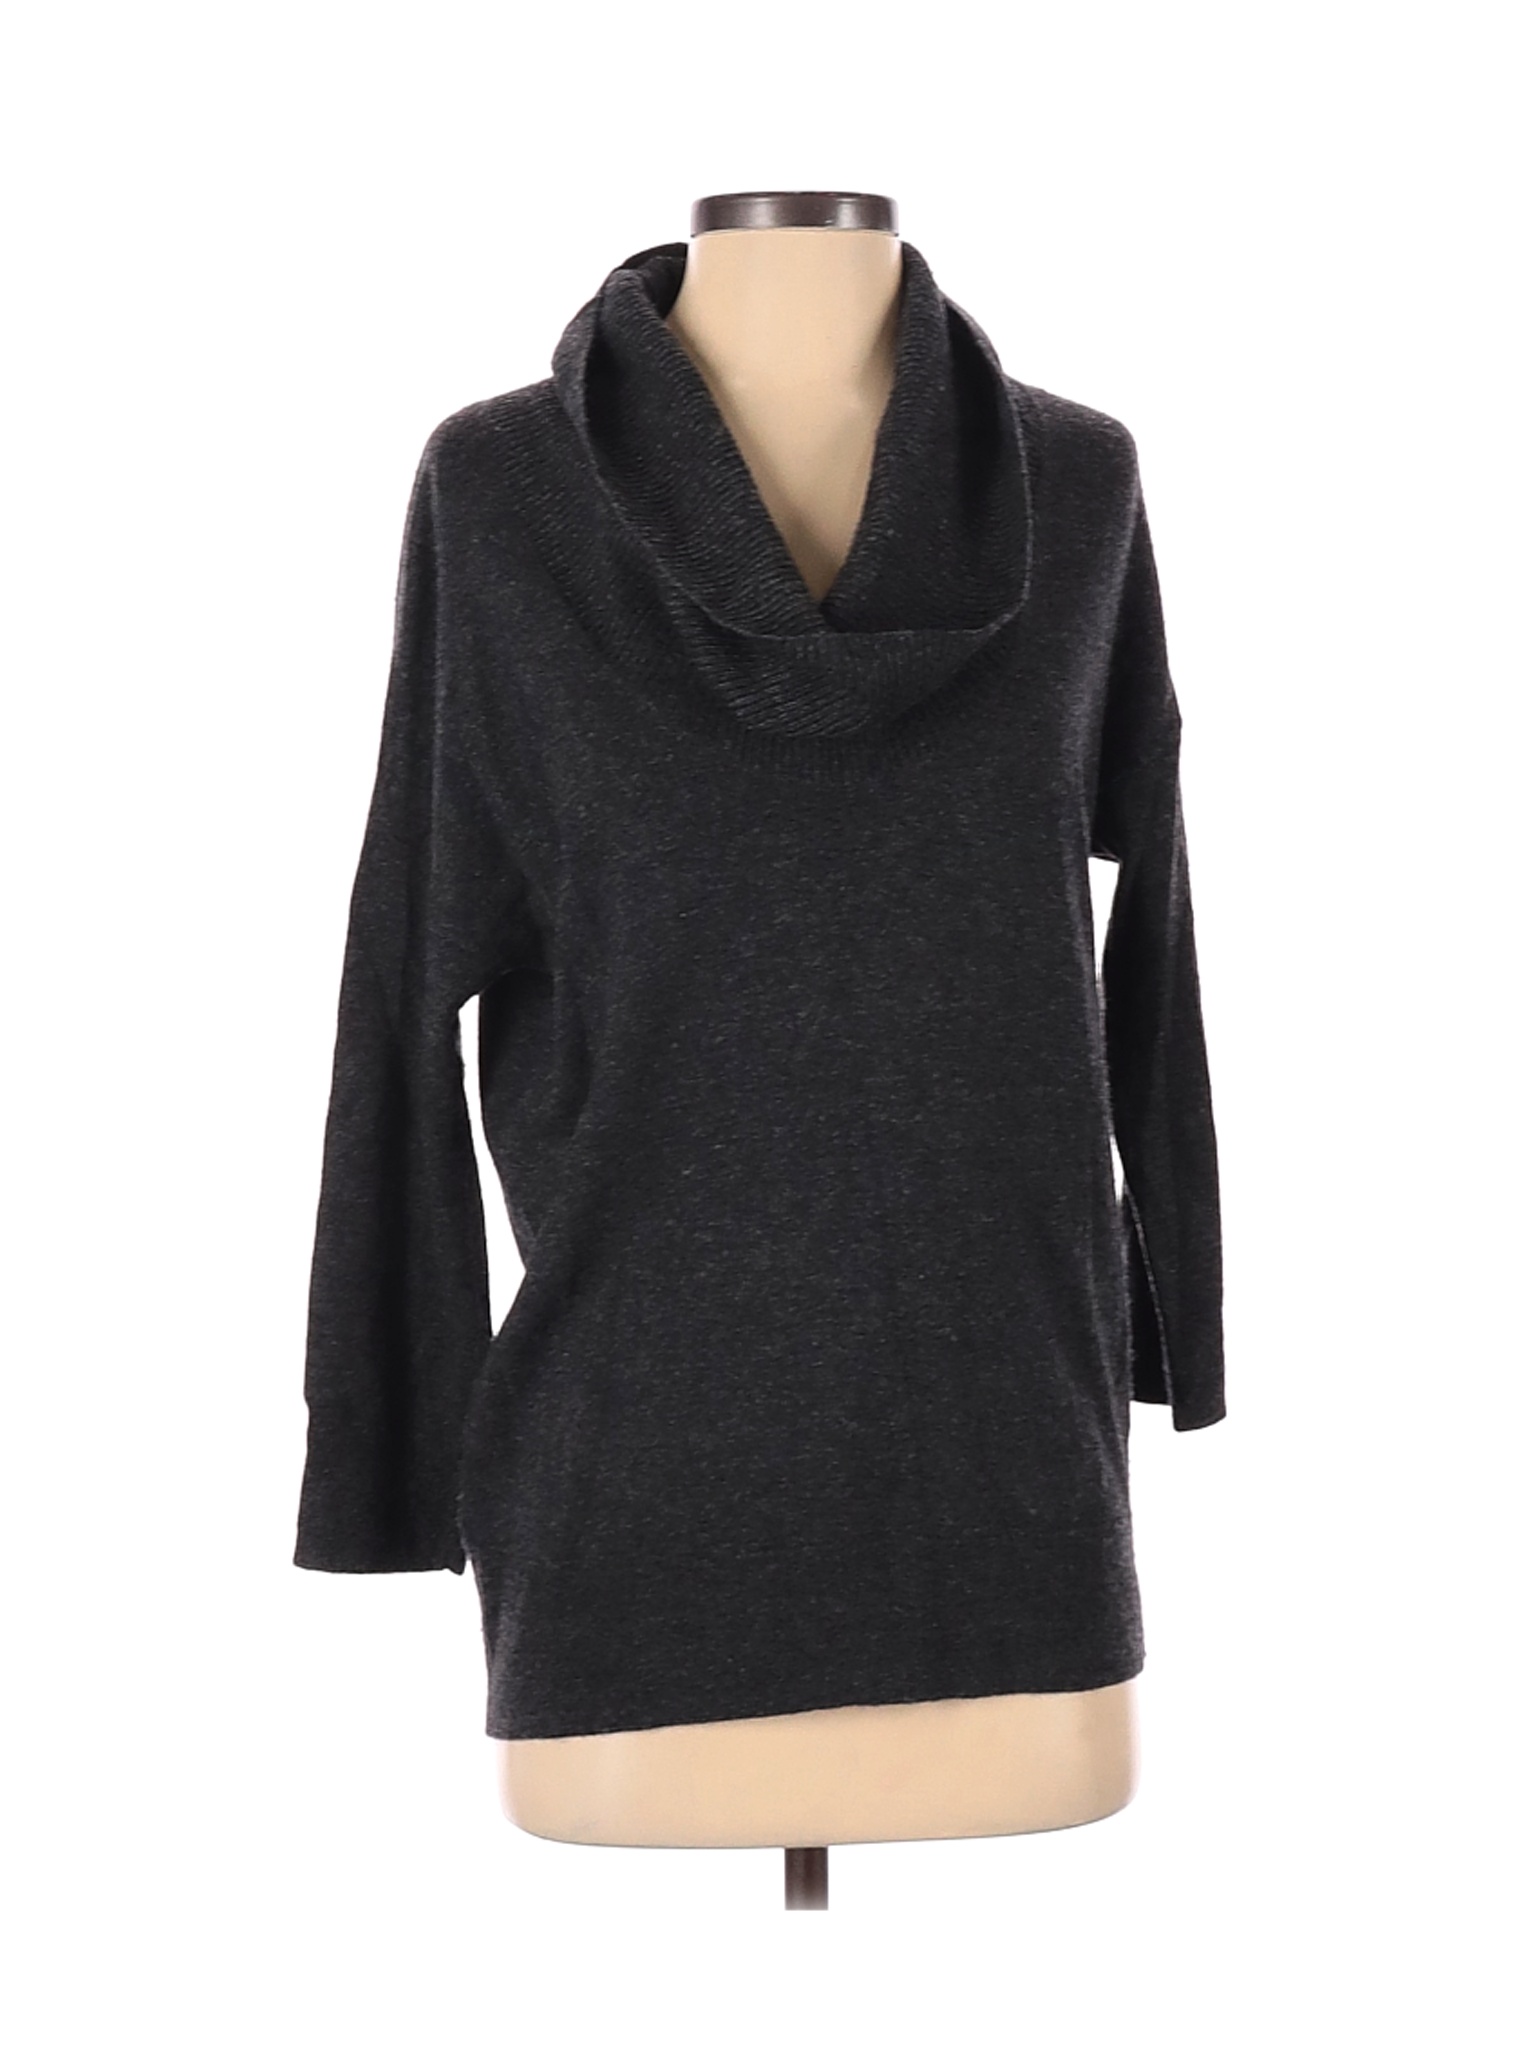 Ann Taylor Women Black Pullover Sweater S | eBay